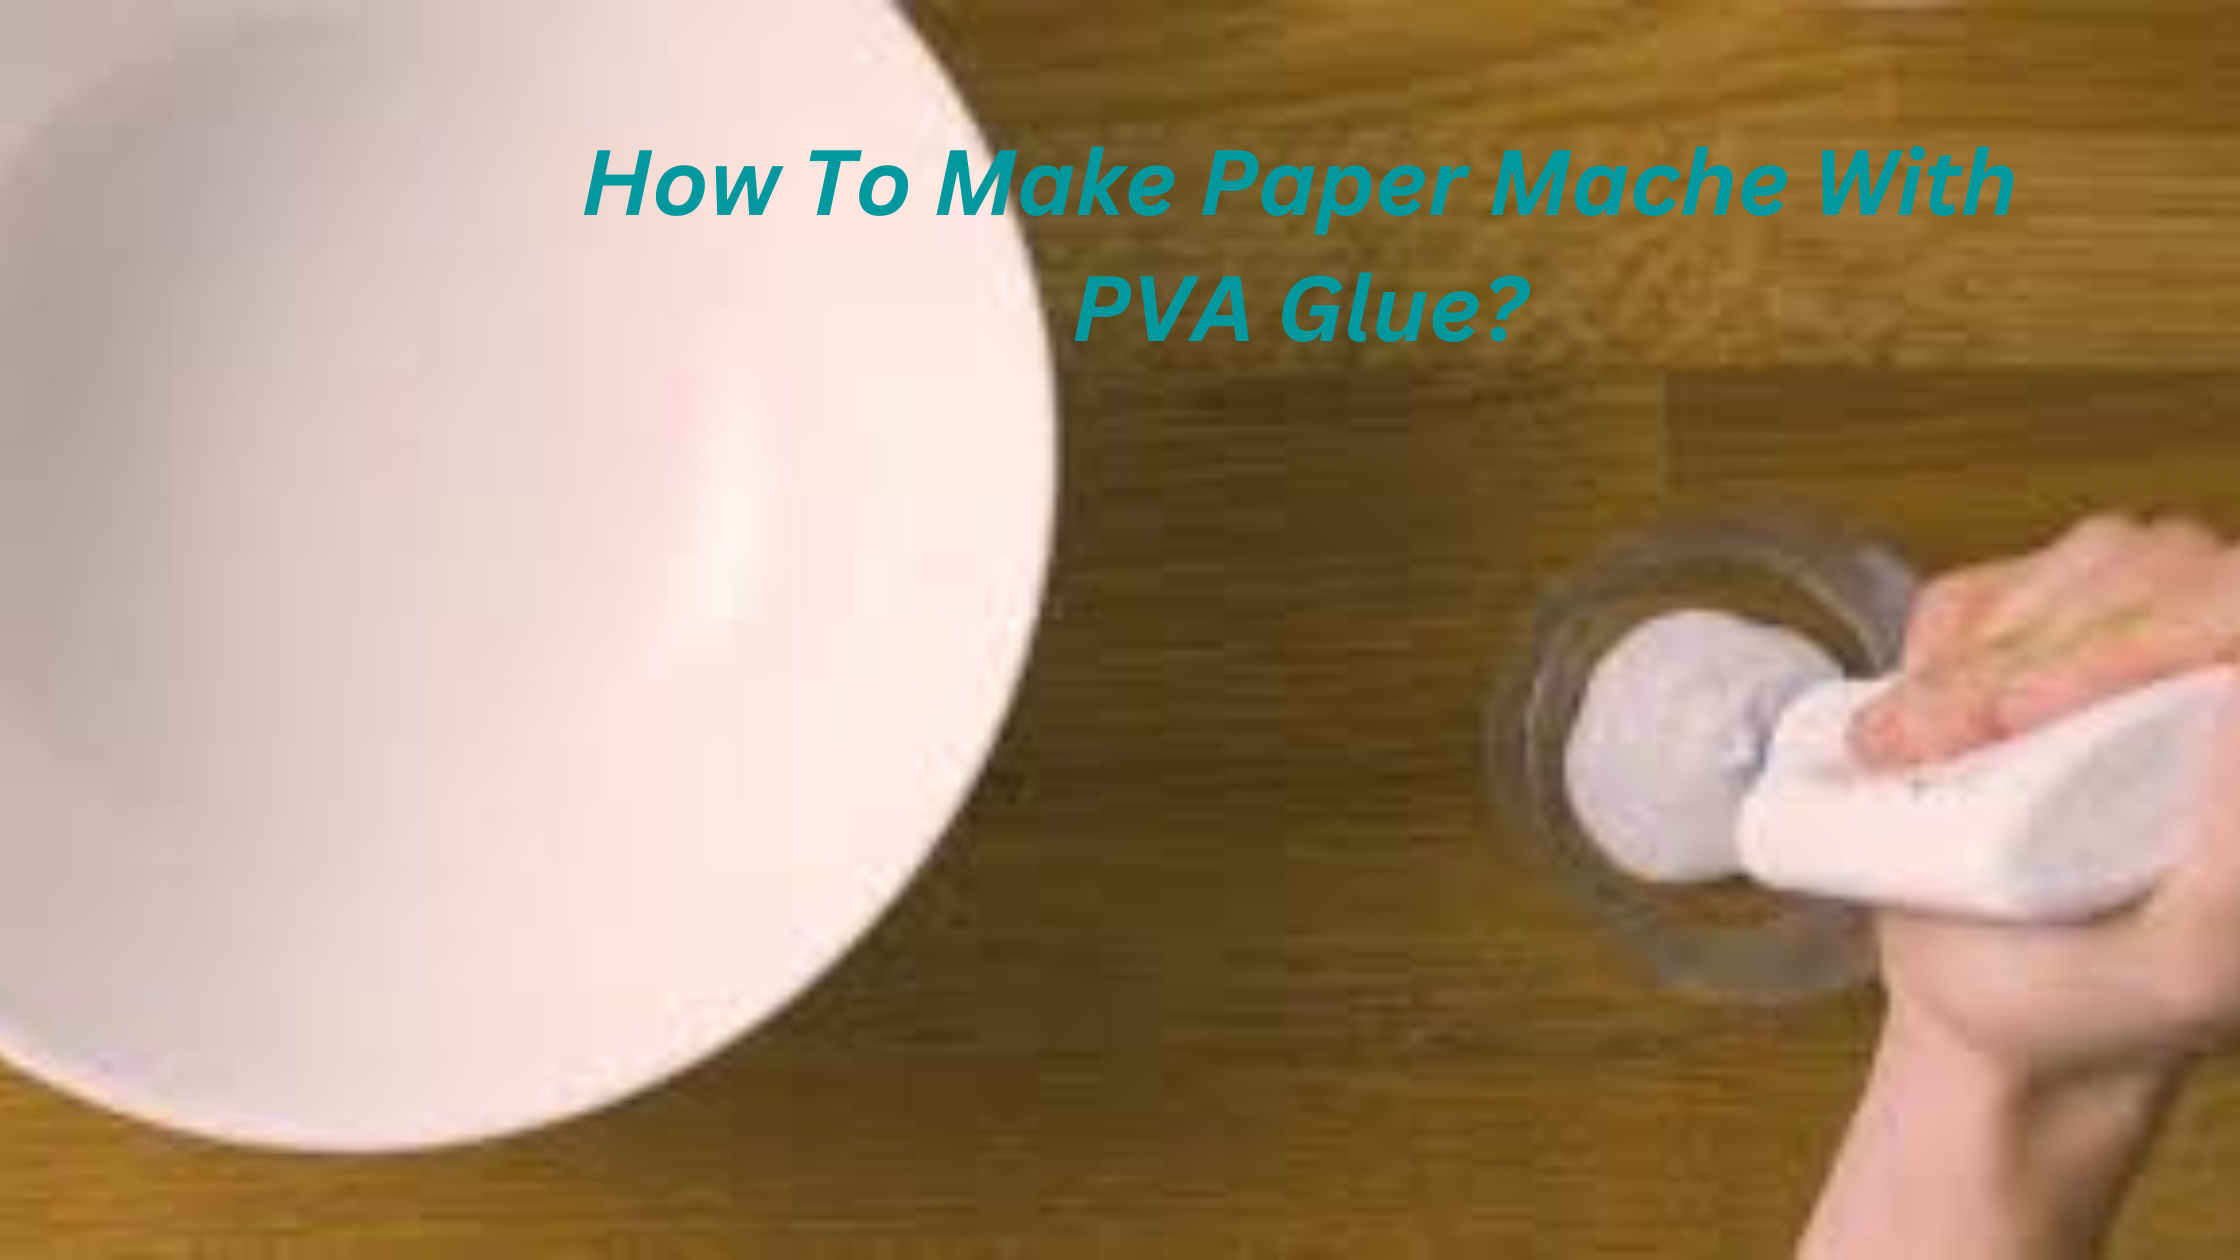 How To Make Paper Mache With PVA Glue?